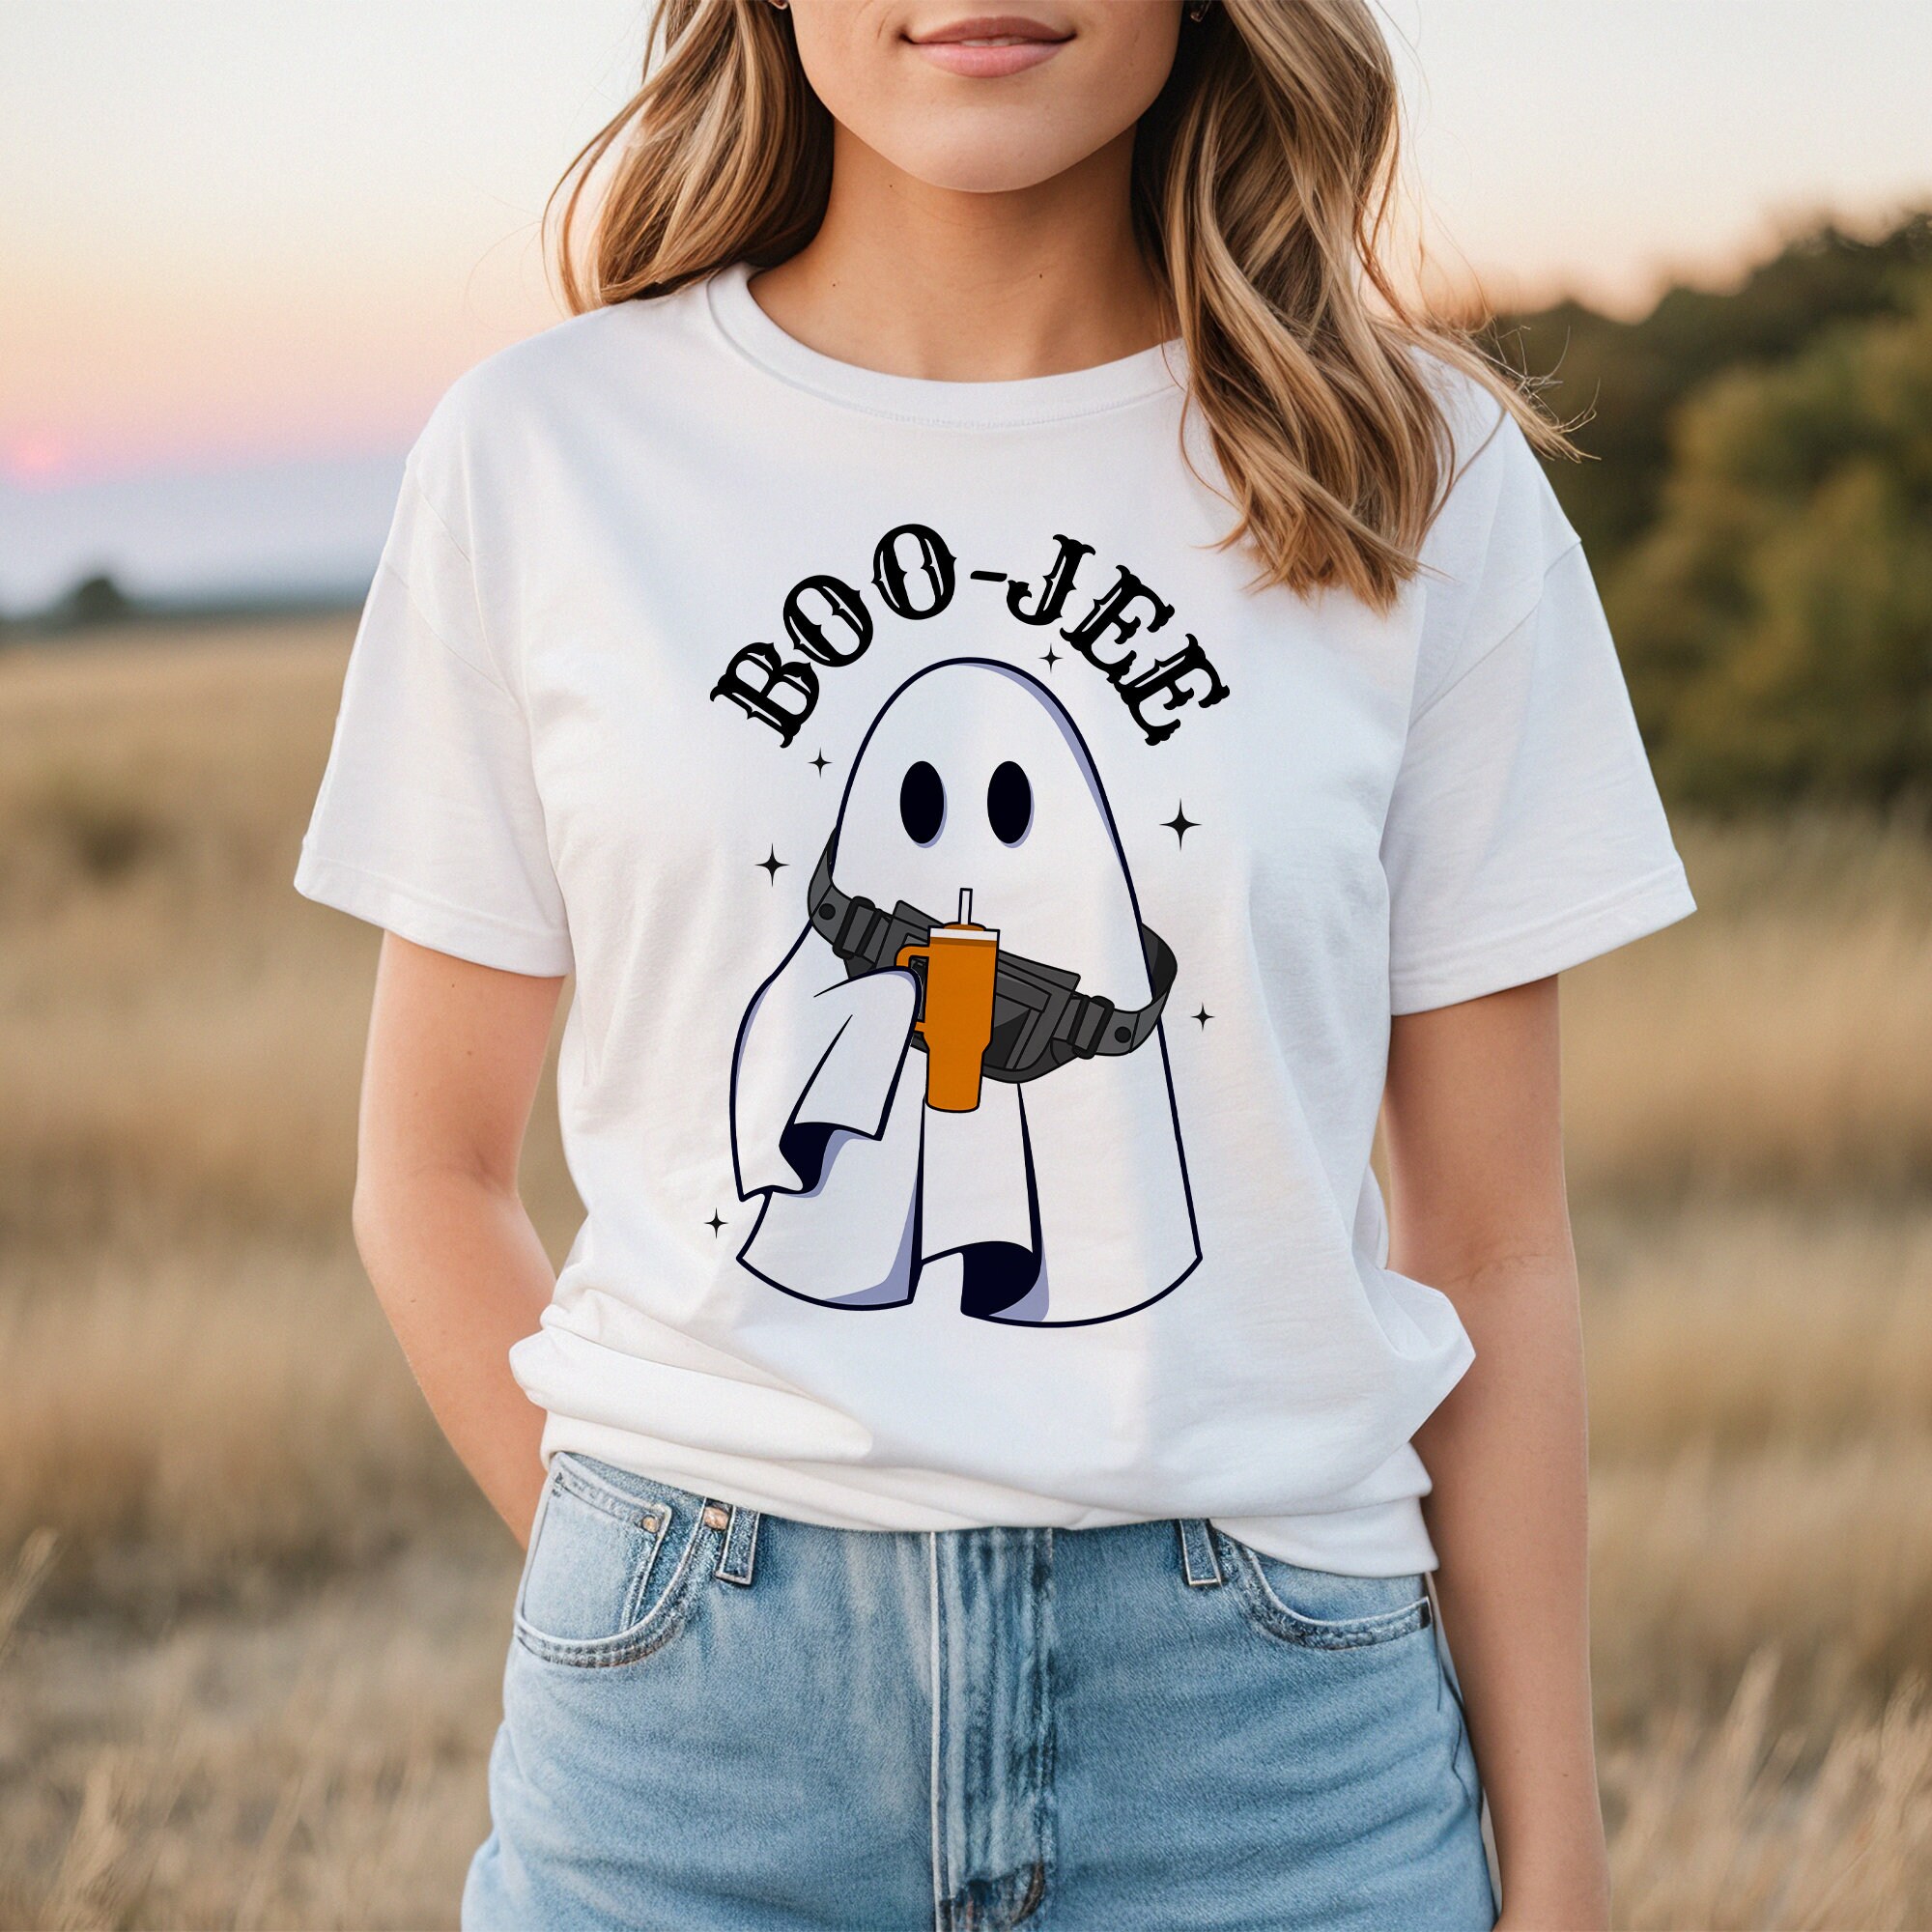 Halloween Shirt Boojee Ghost Shirt Louis Shirt Bougie 